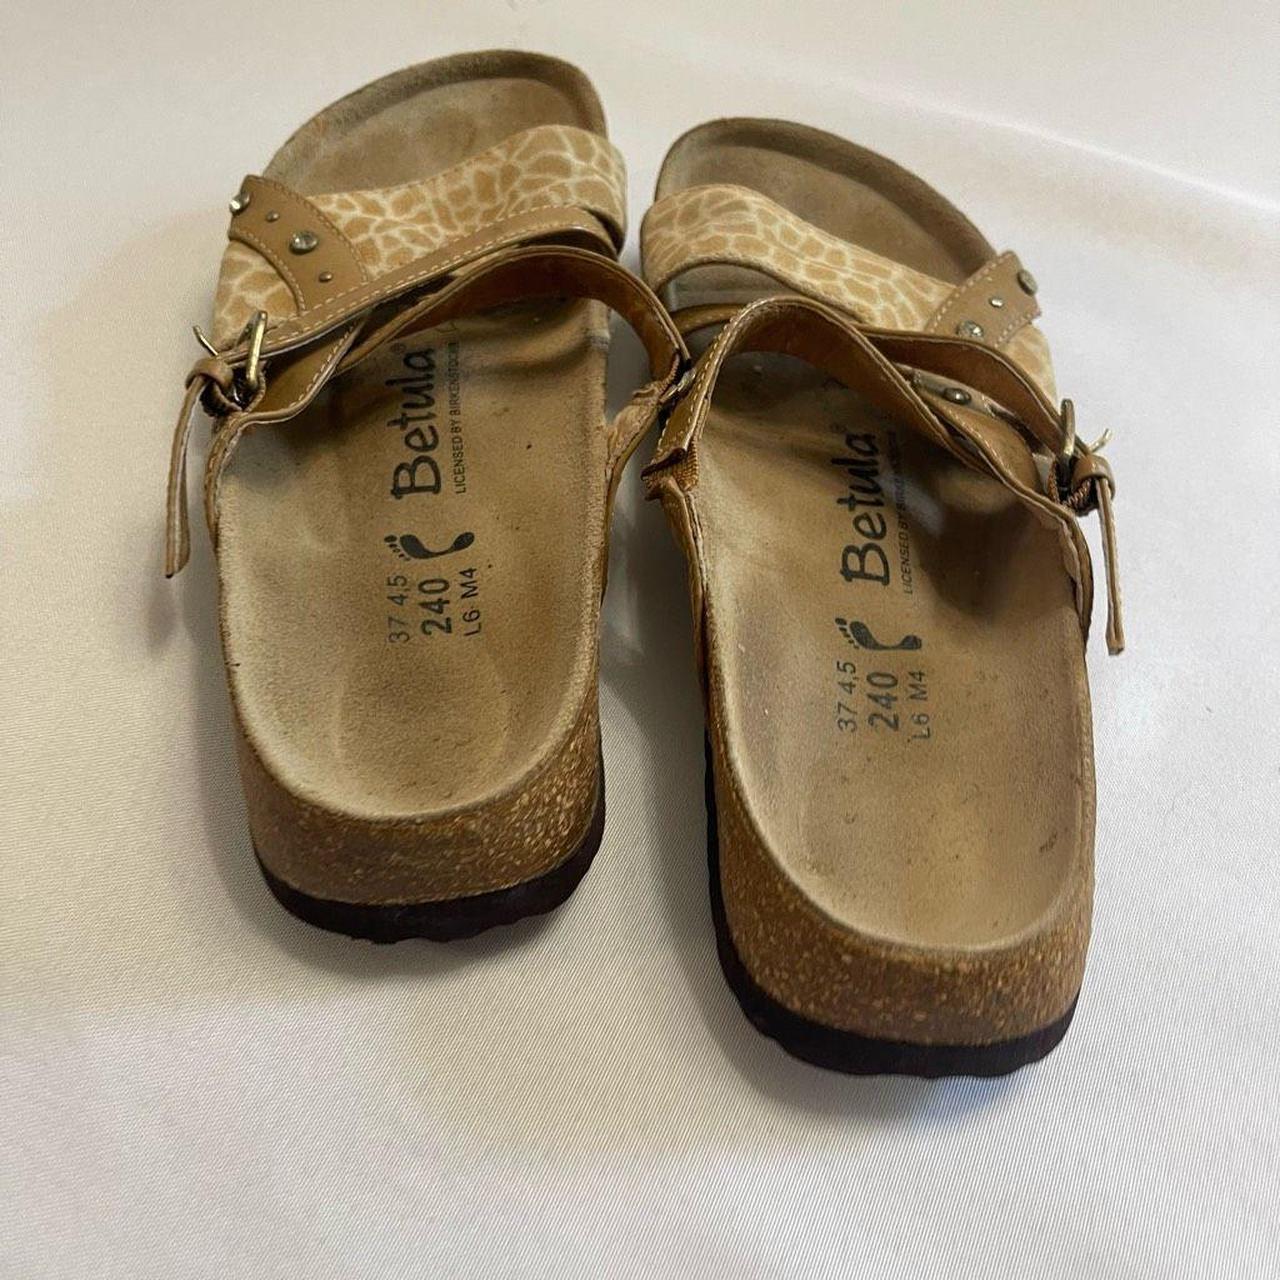 Betula Birkenstock sandals